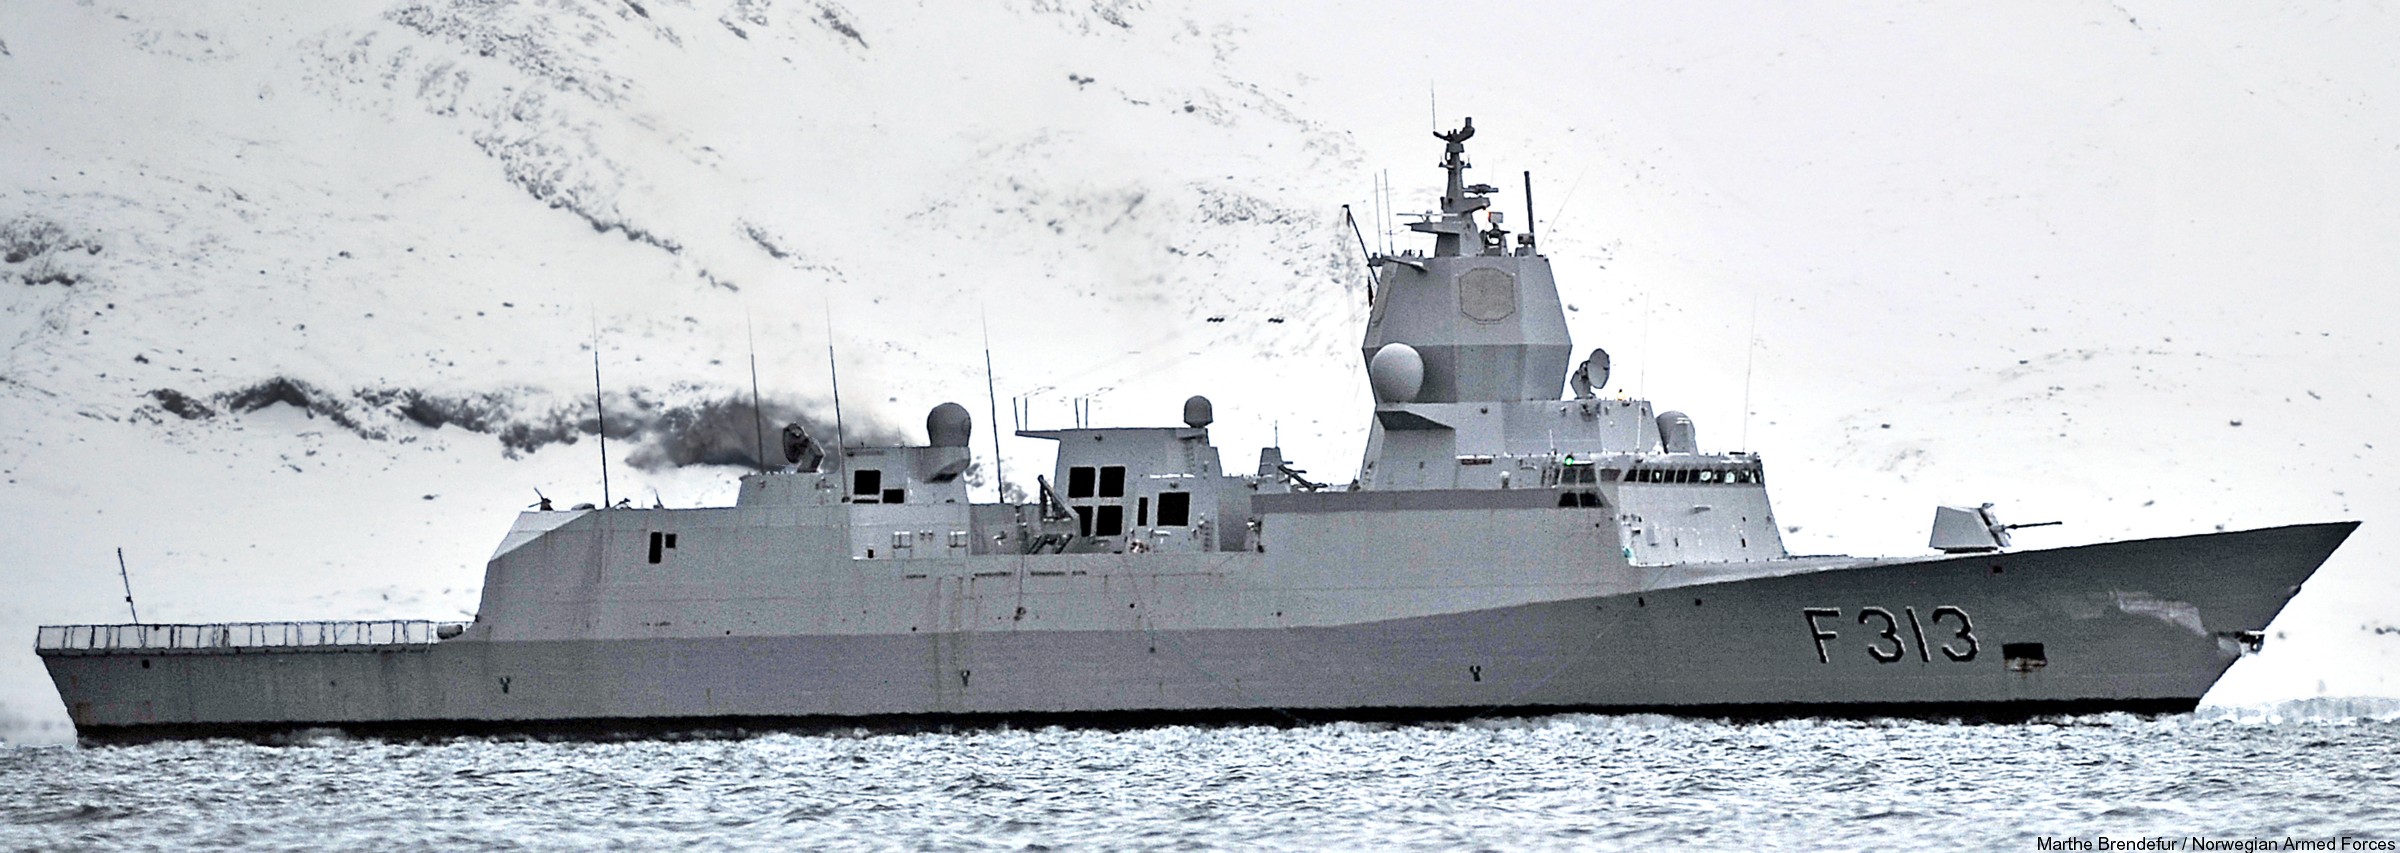 f-313 helge ingstad hnoms knm nansen class frigate royal norwegian navy 29